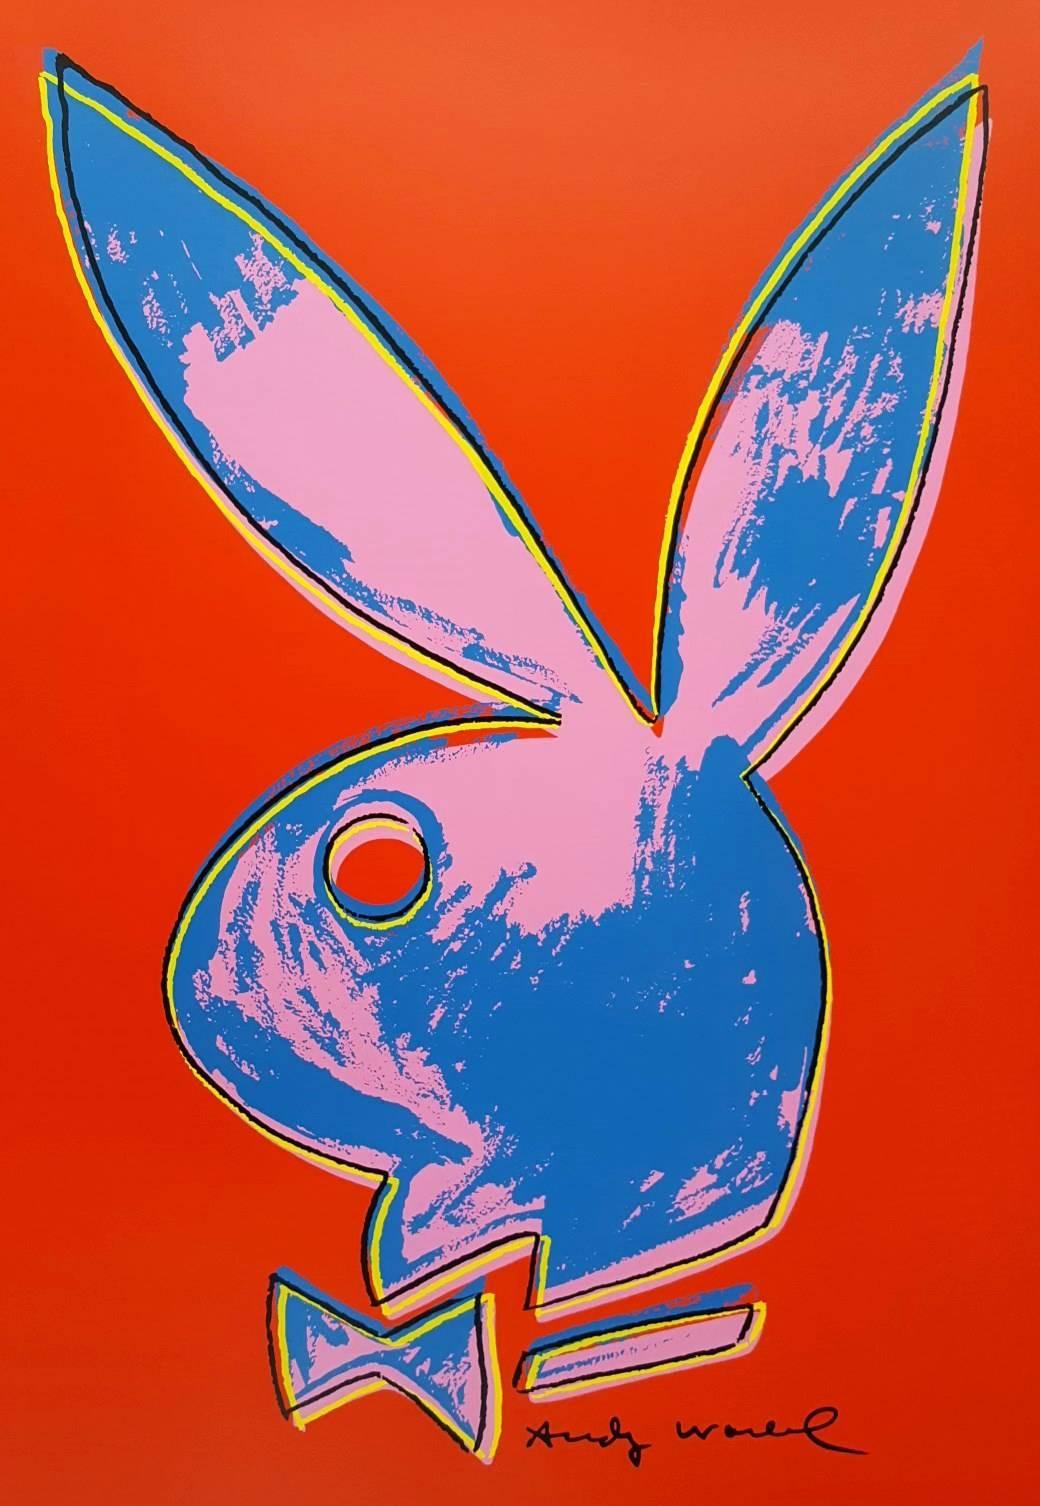 Playboy 35th Anniversary - Print by Andy Warhol